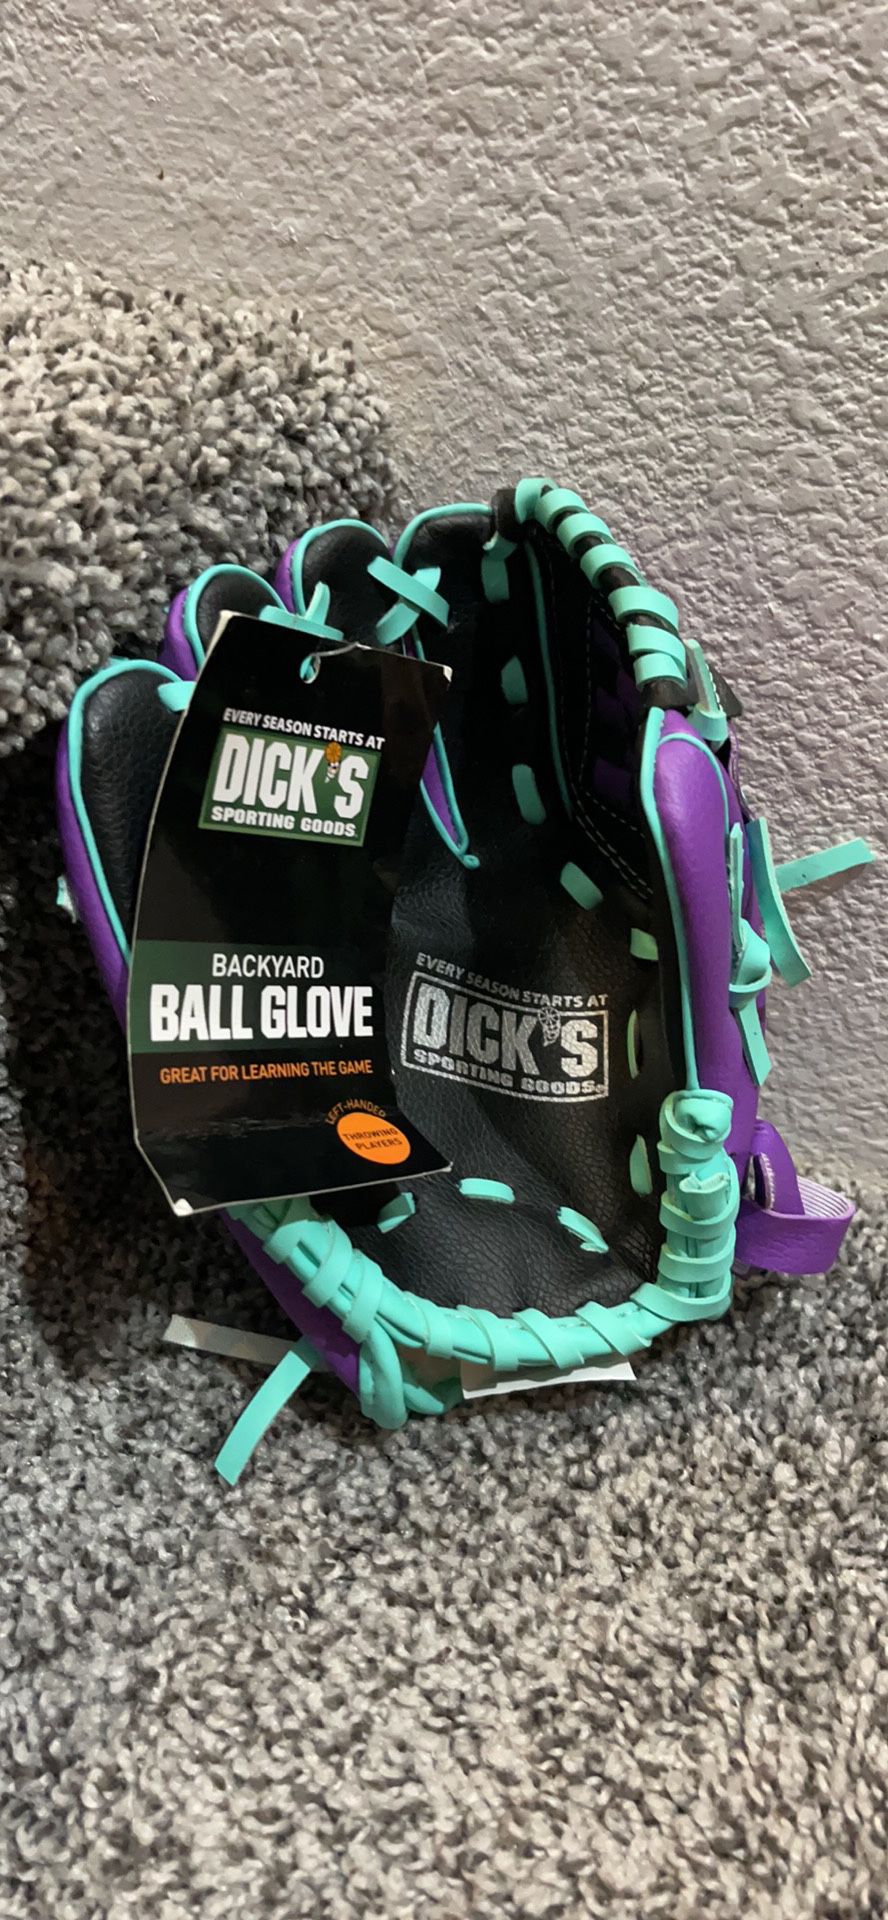 Ball glove - Toddler Sized